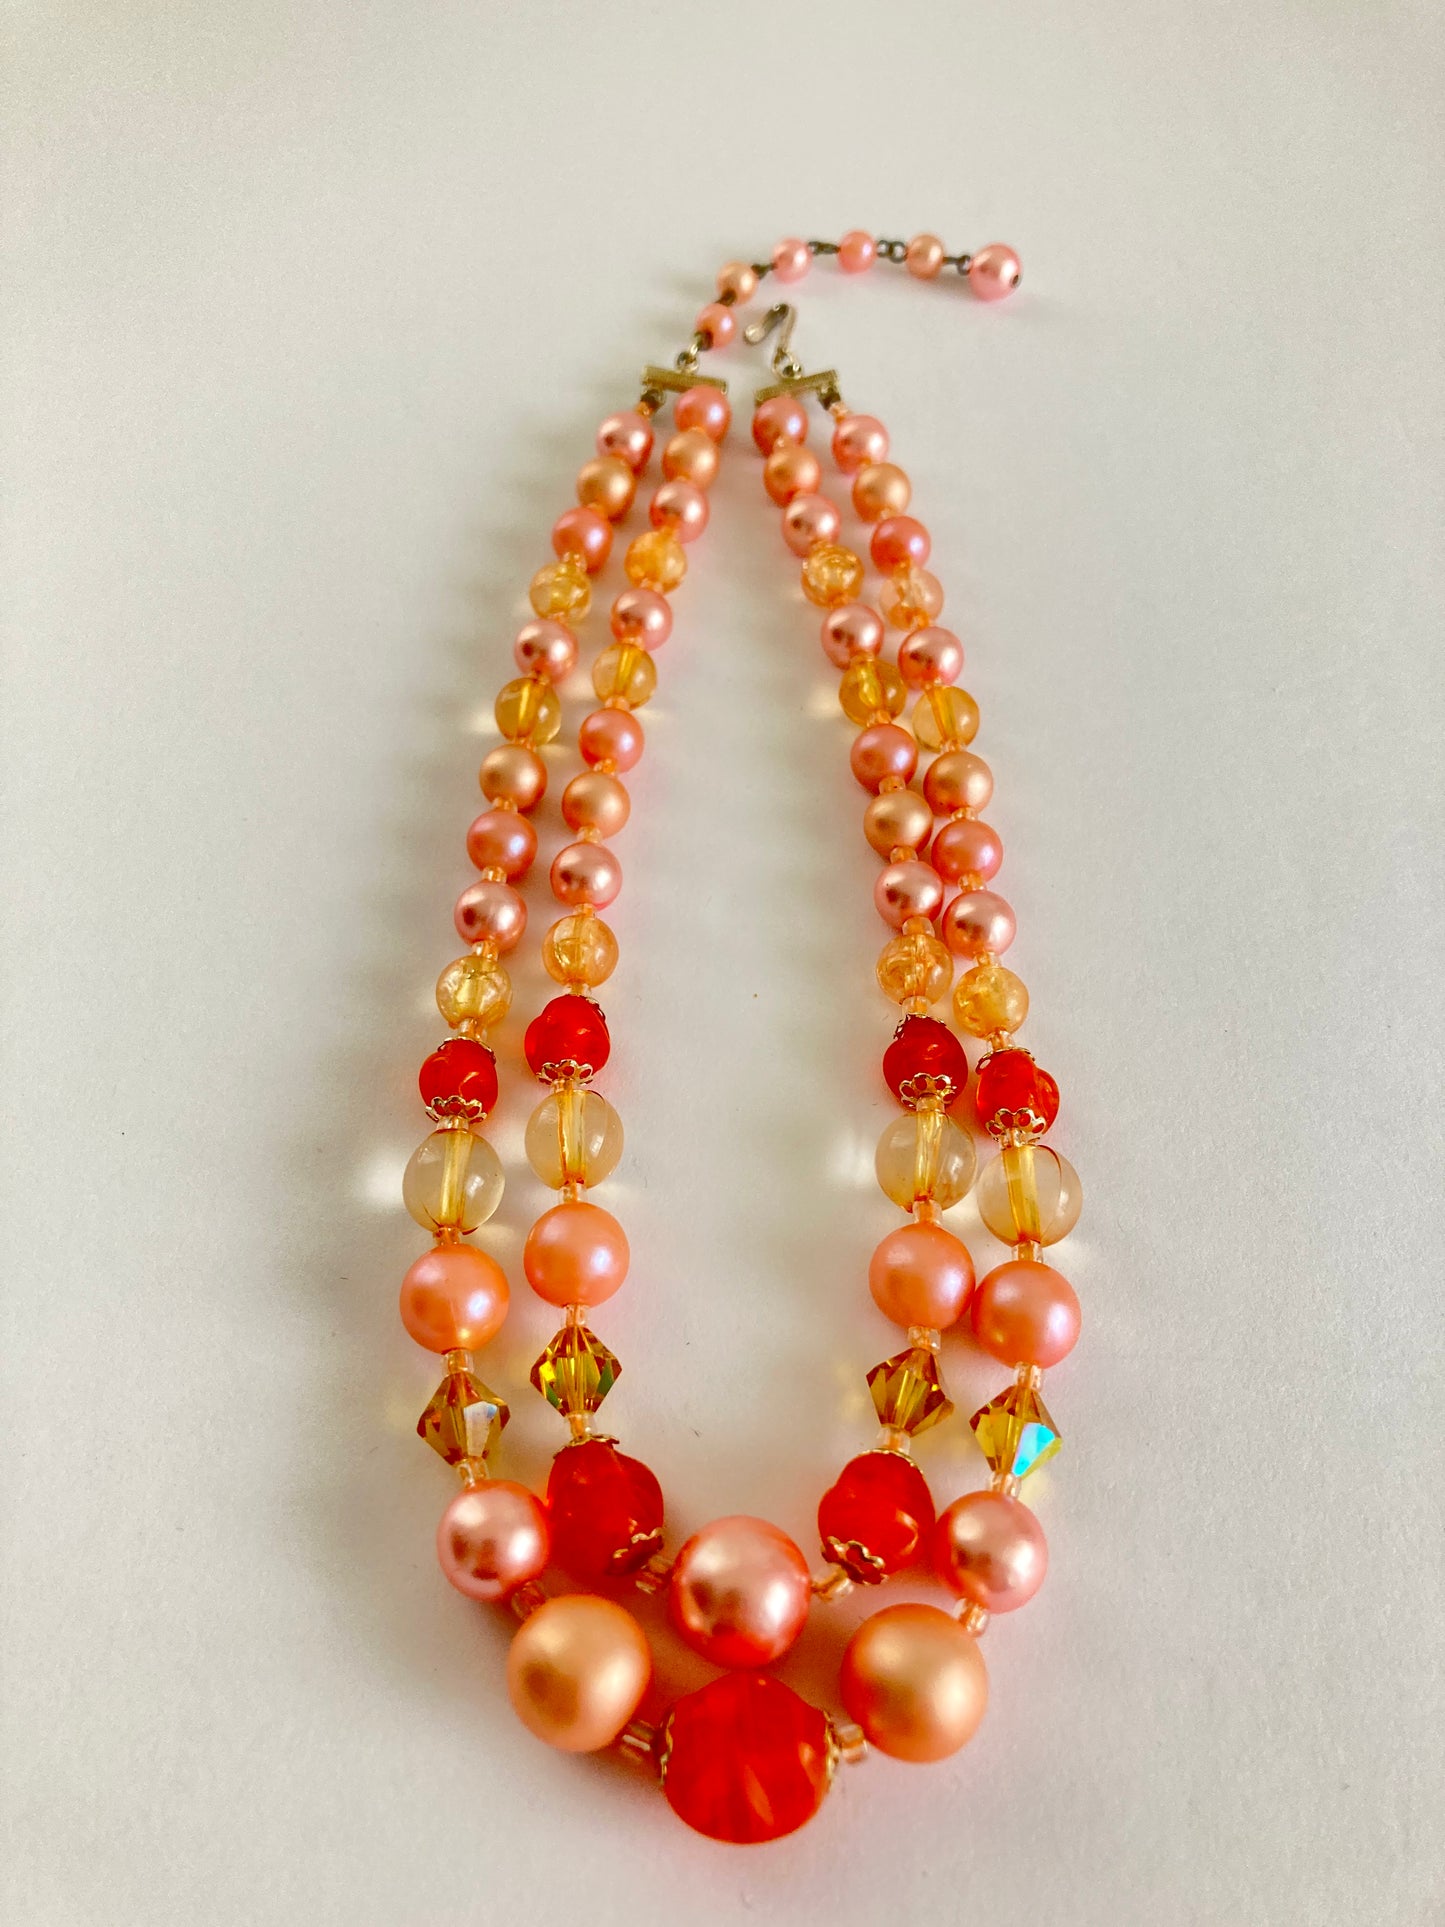 1950s Japan Pink, Orange, & Golden Double Strand Necklace